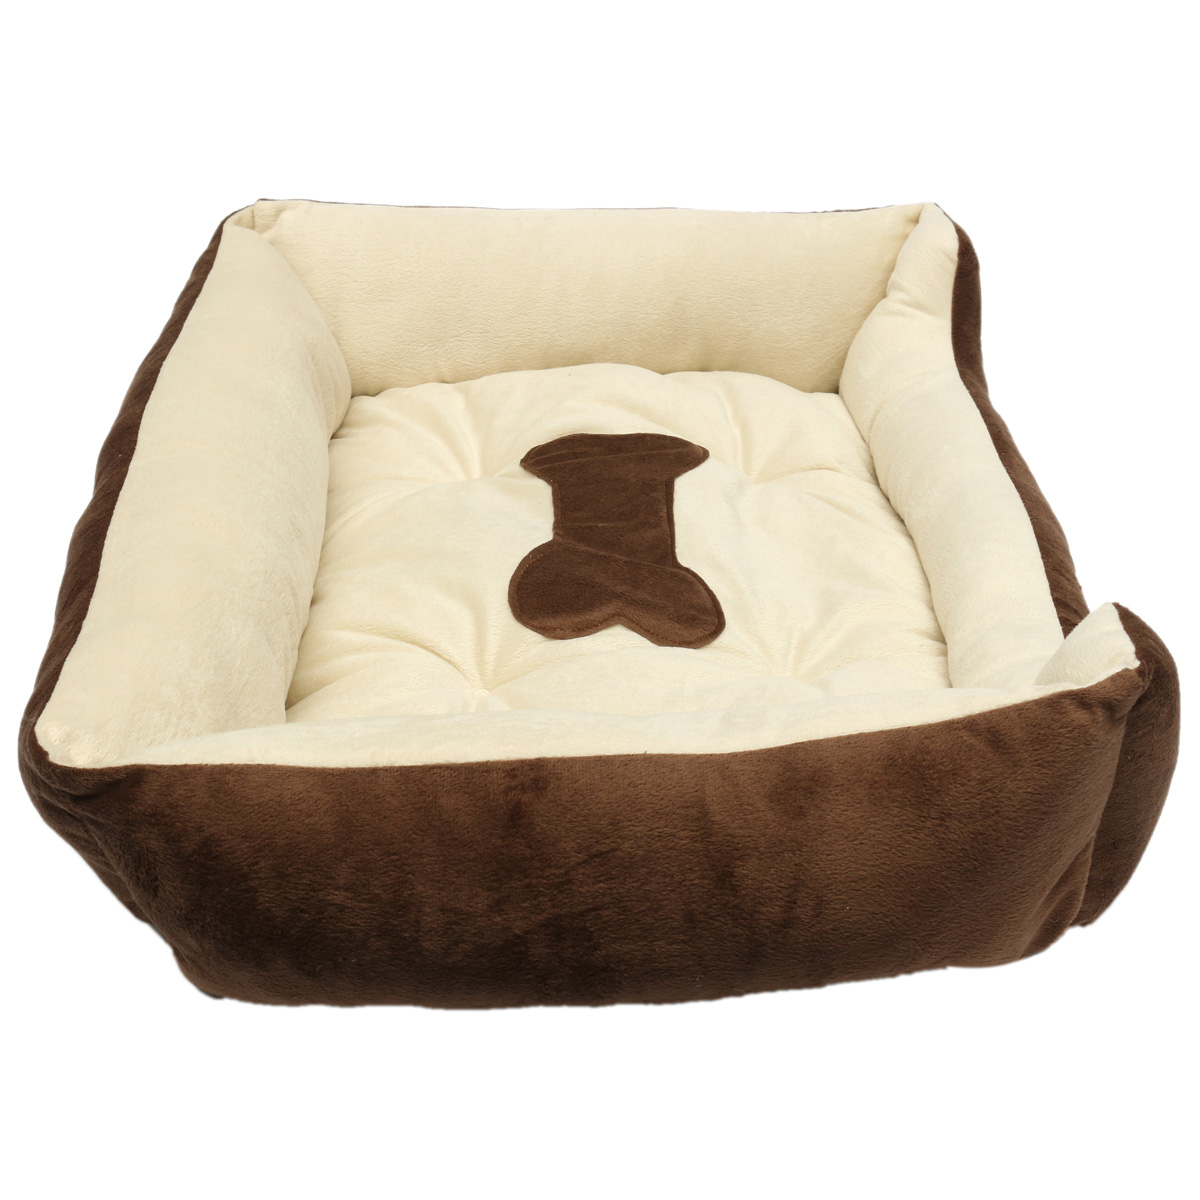 Large-Pet-Dog-Warm-Bed-Puppy-Cat-Soft-Fleece-Cozy-Mat-Pad-Kennel-Cushion-Pet-Mat-1037381-7